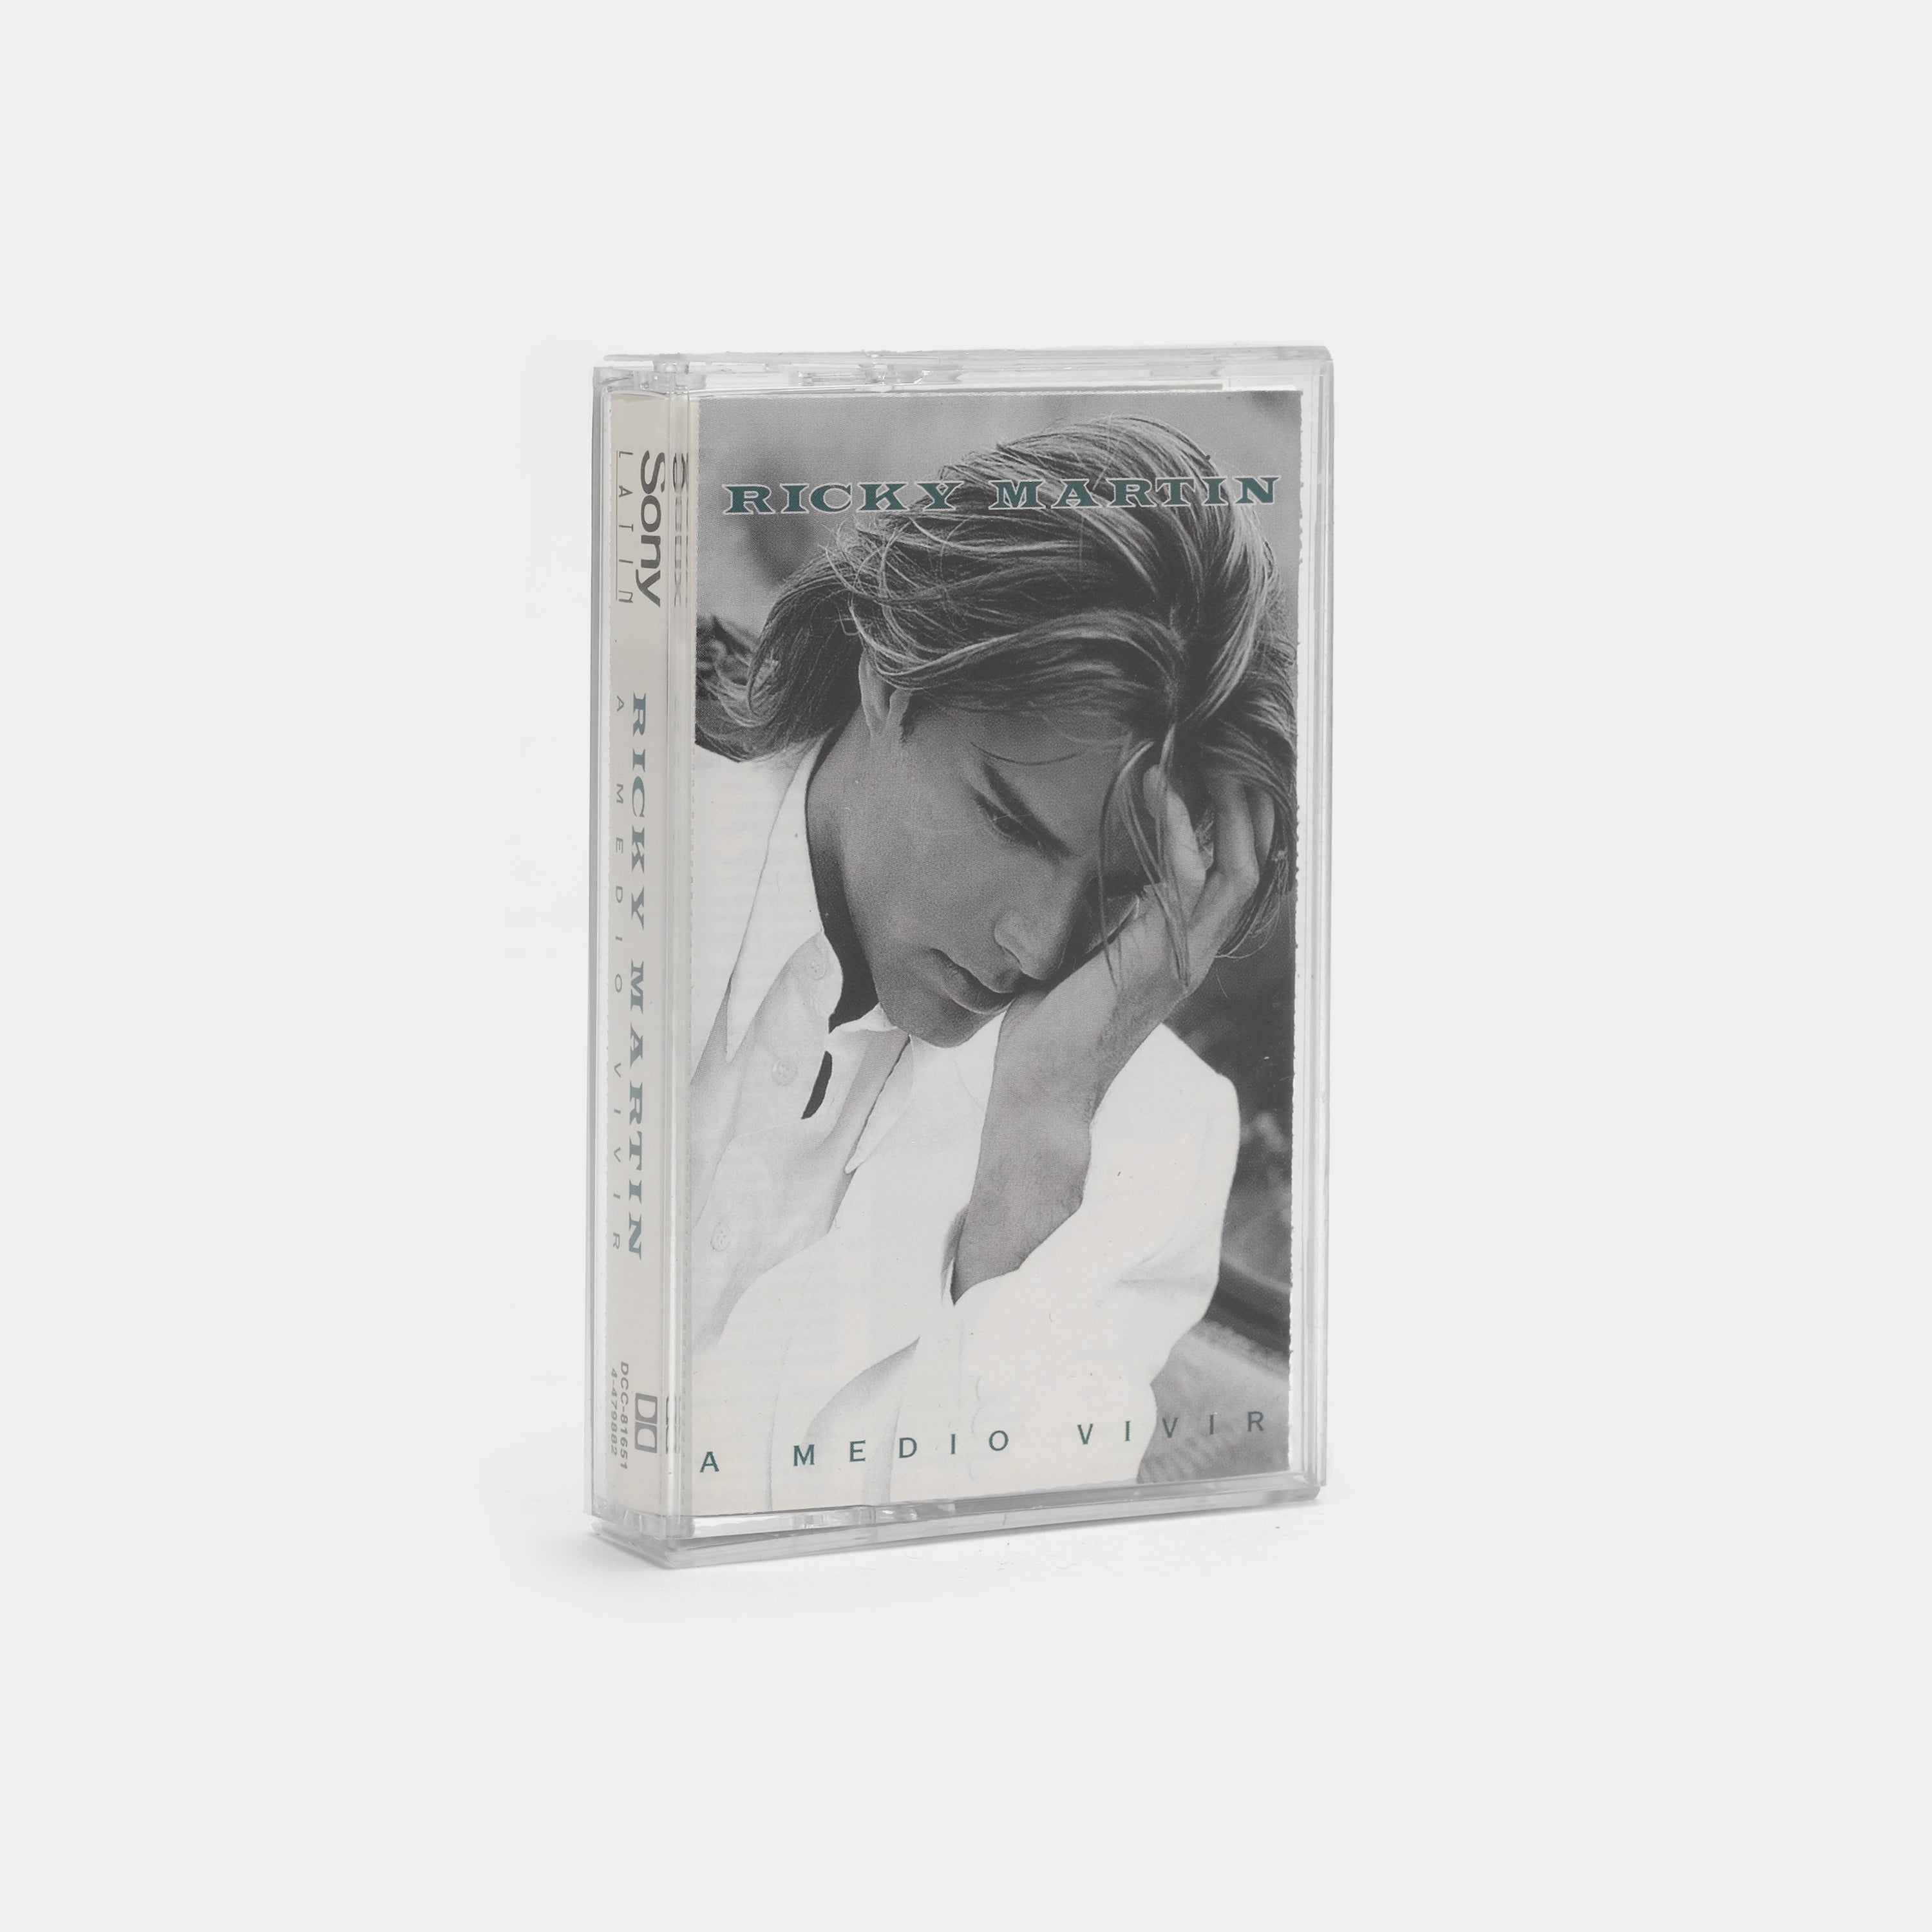 Ricky Martin - A Medio Vivir Cassette Tape